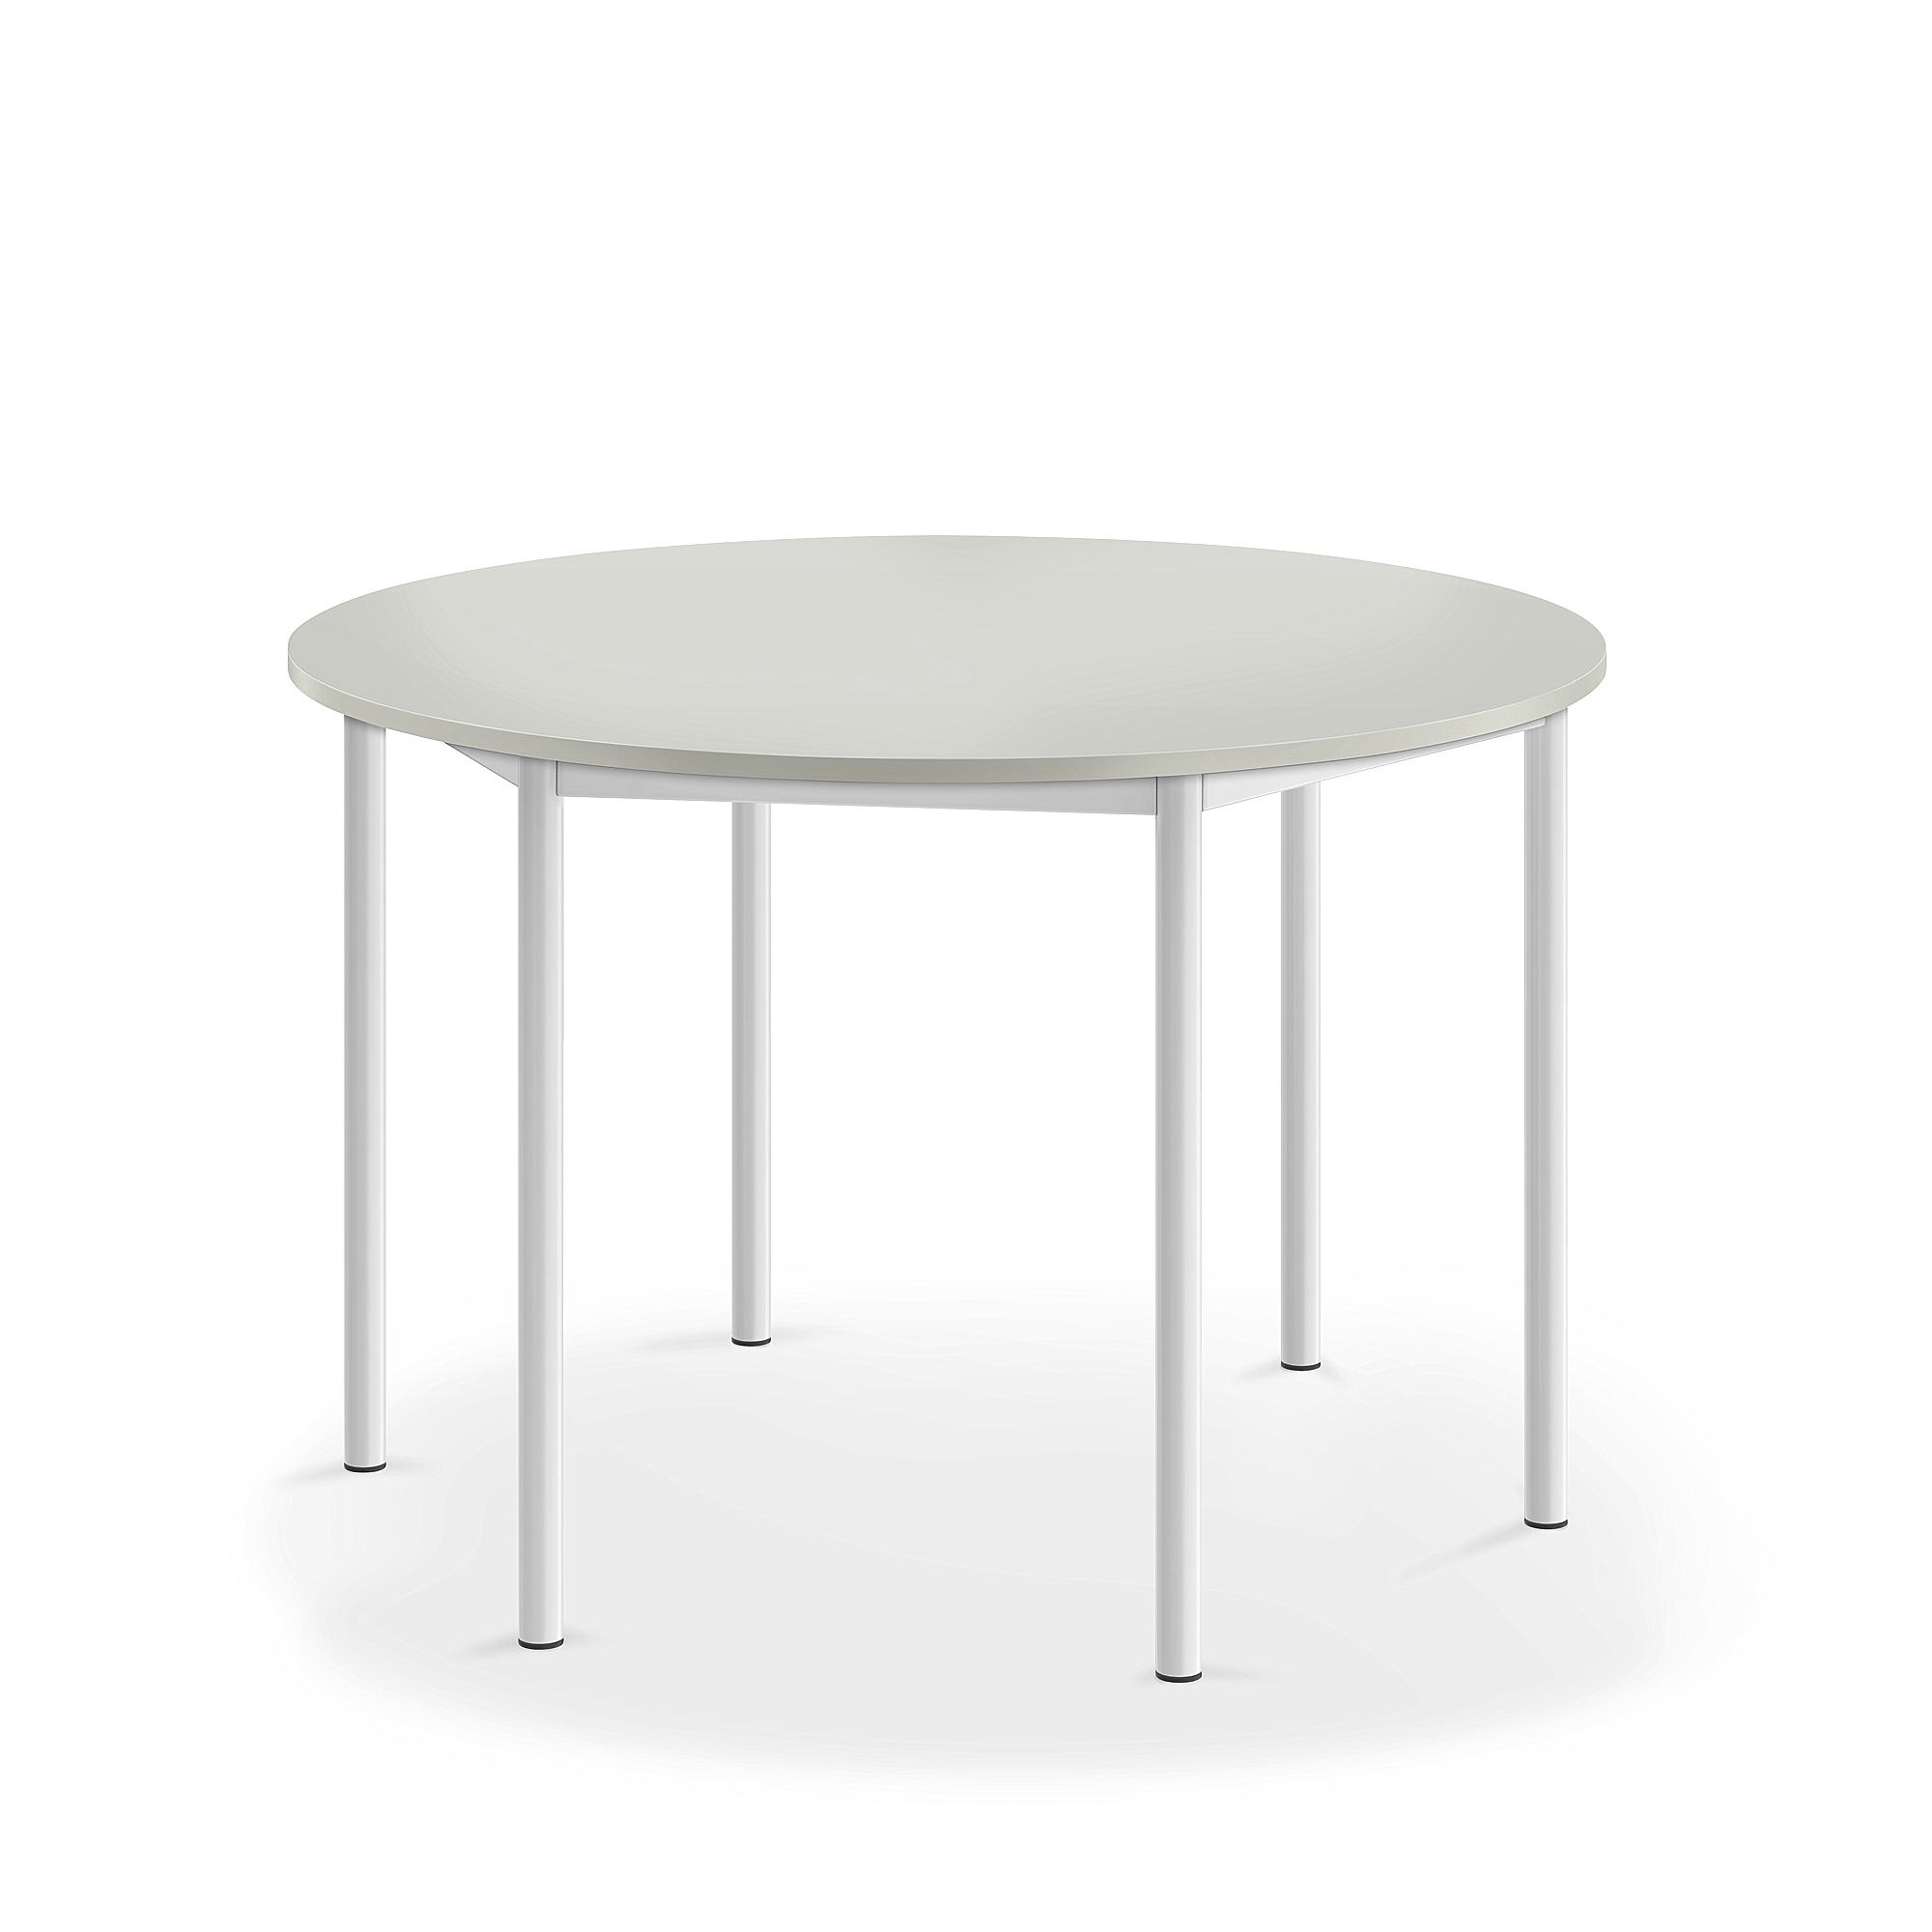 Stůl SONITUS, Ø1200x760 mm, bílé nohy, HPL deska tlumící hluk, šedá